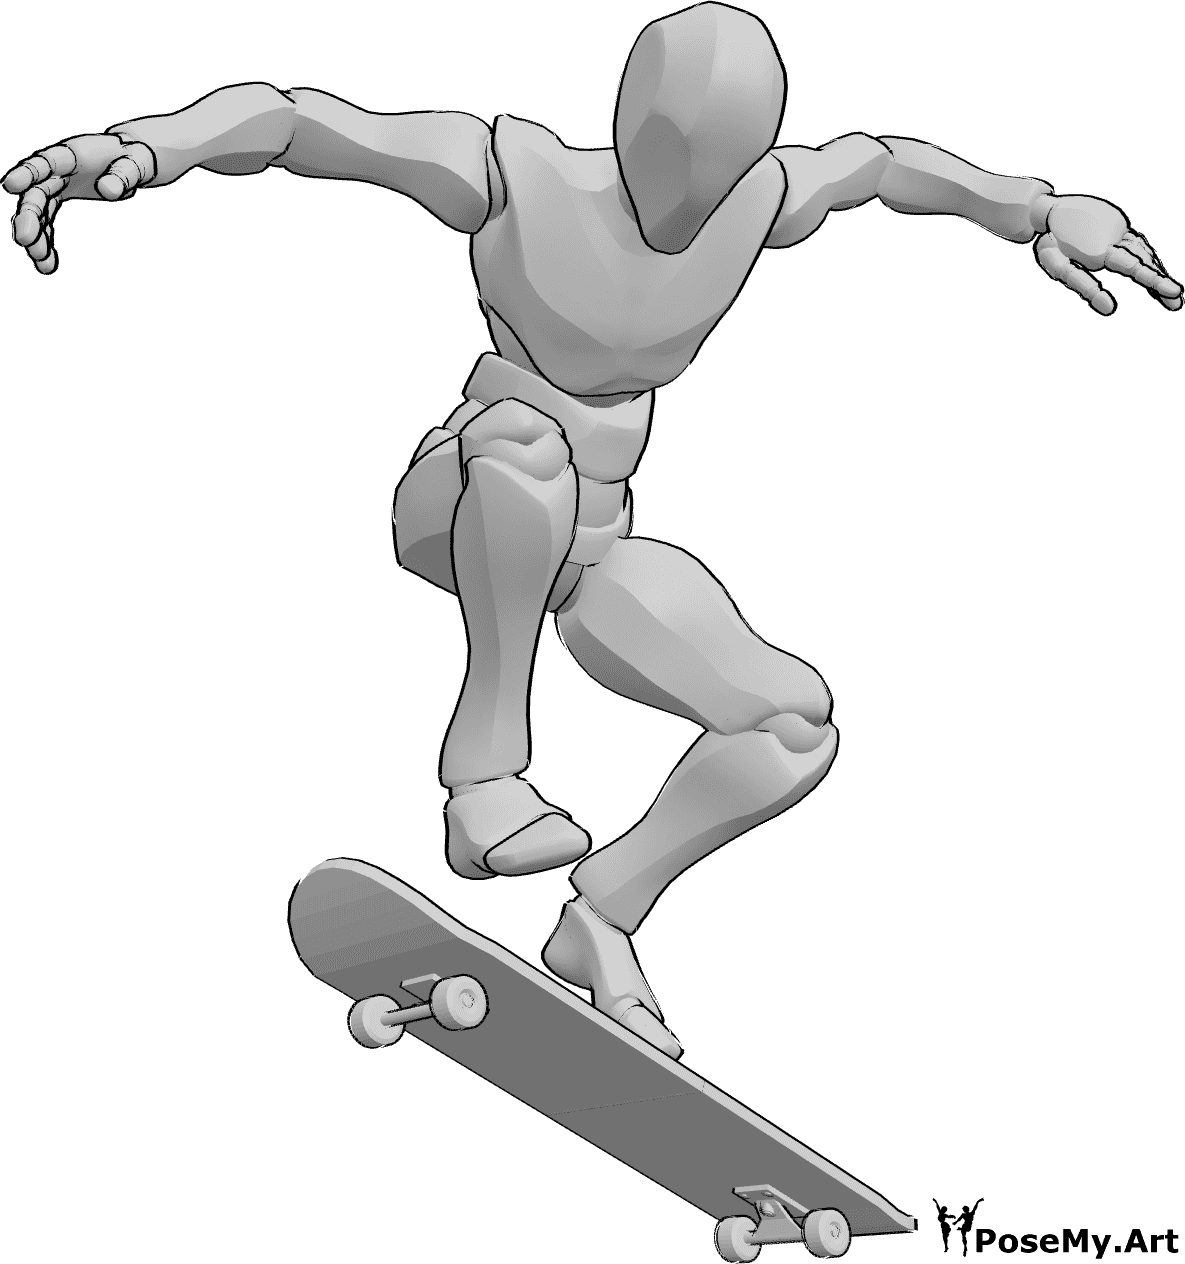 Riferimento alle pose- Posa kickflip da skateboard - Maschio è lo skateboard, facendo un kickflip in aria, riferimento disegno skateboard